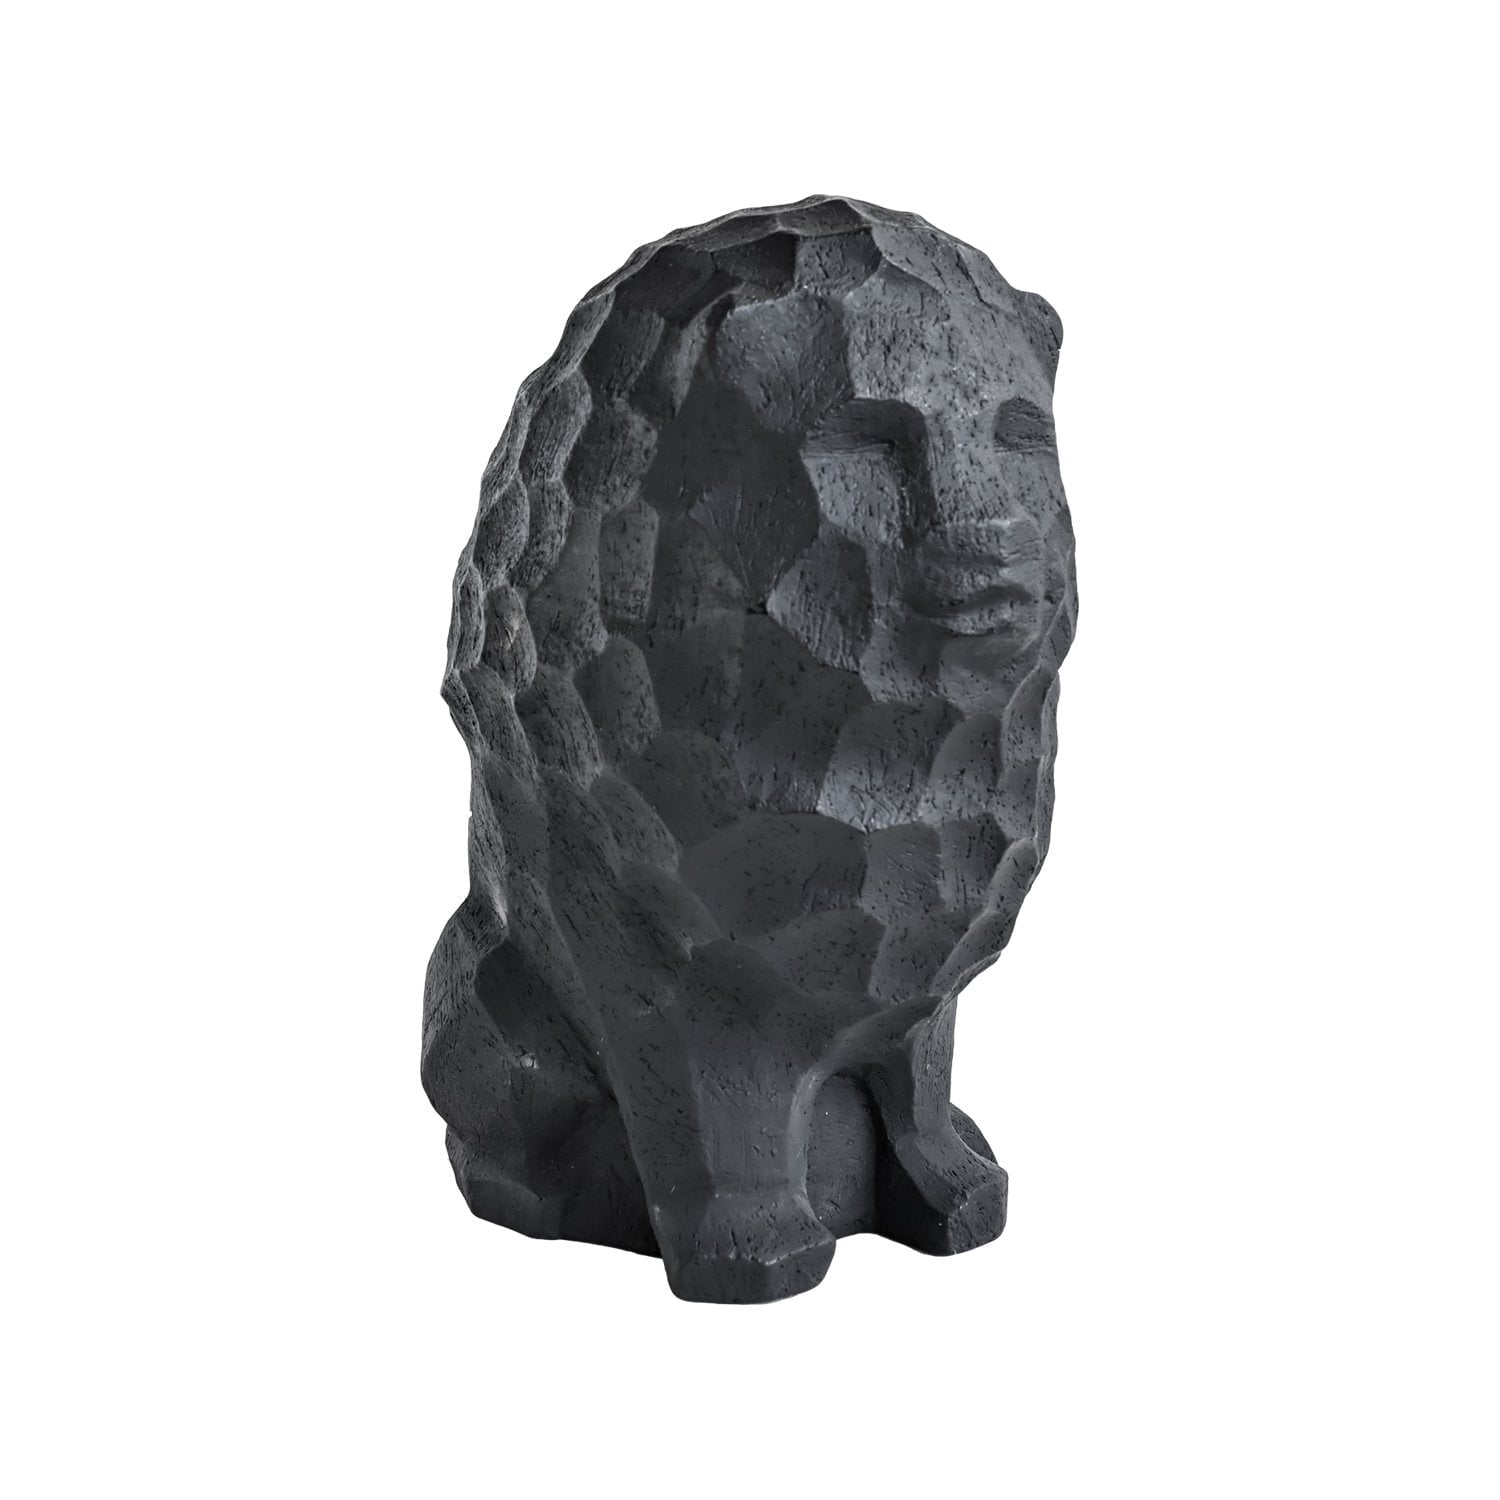 Cooee Sculpture Lion of Judah